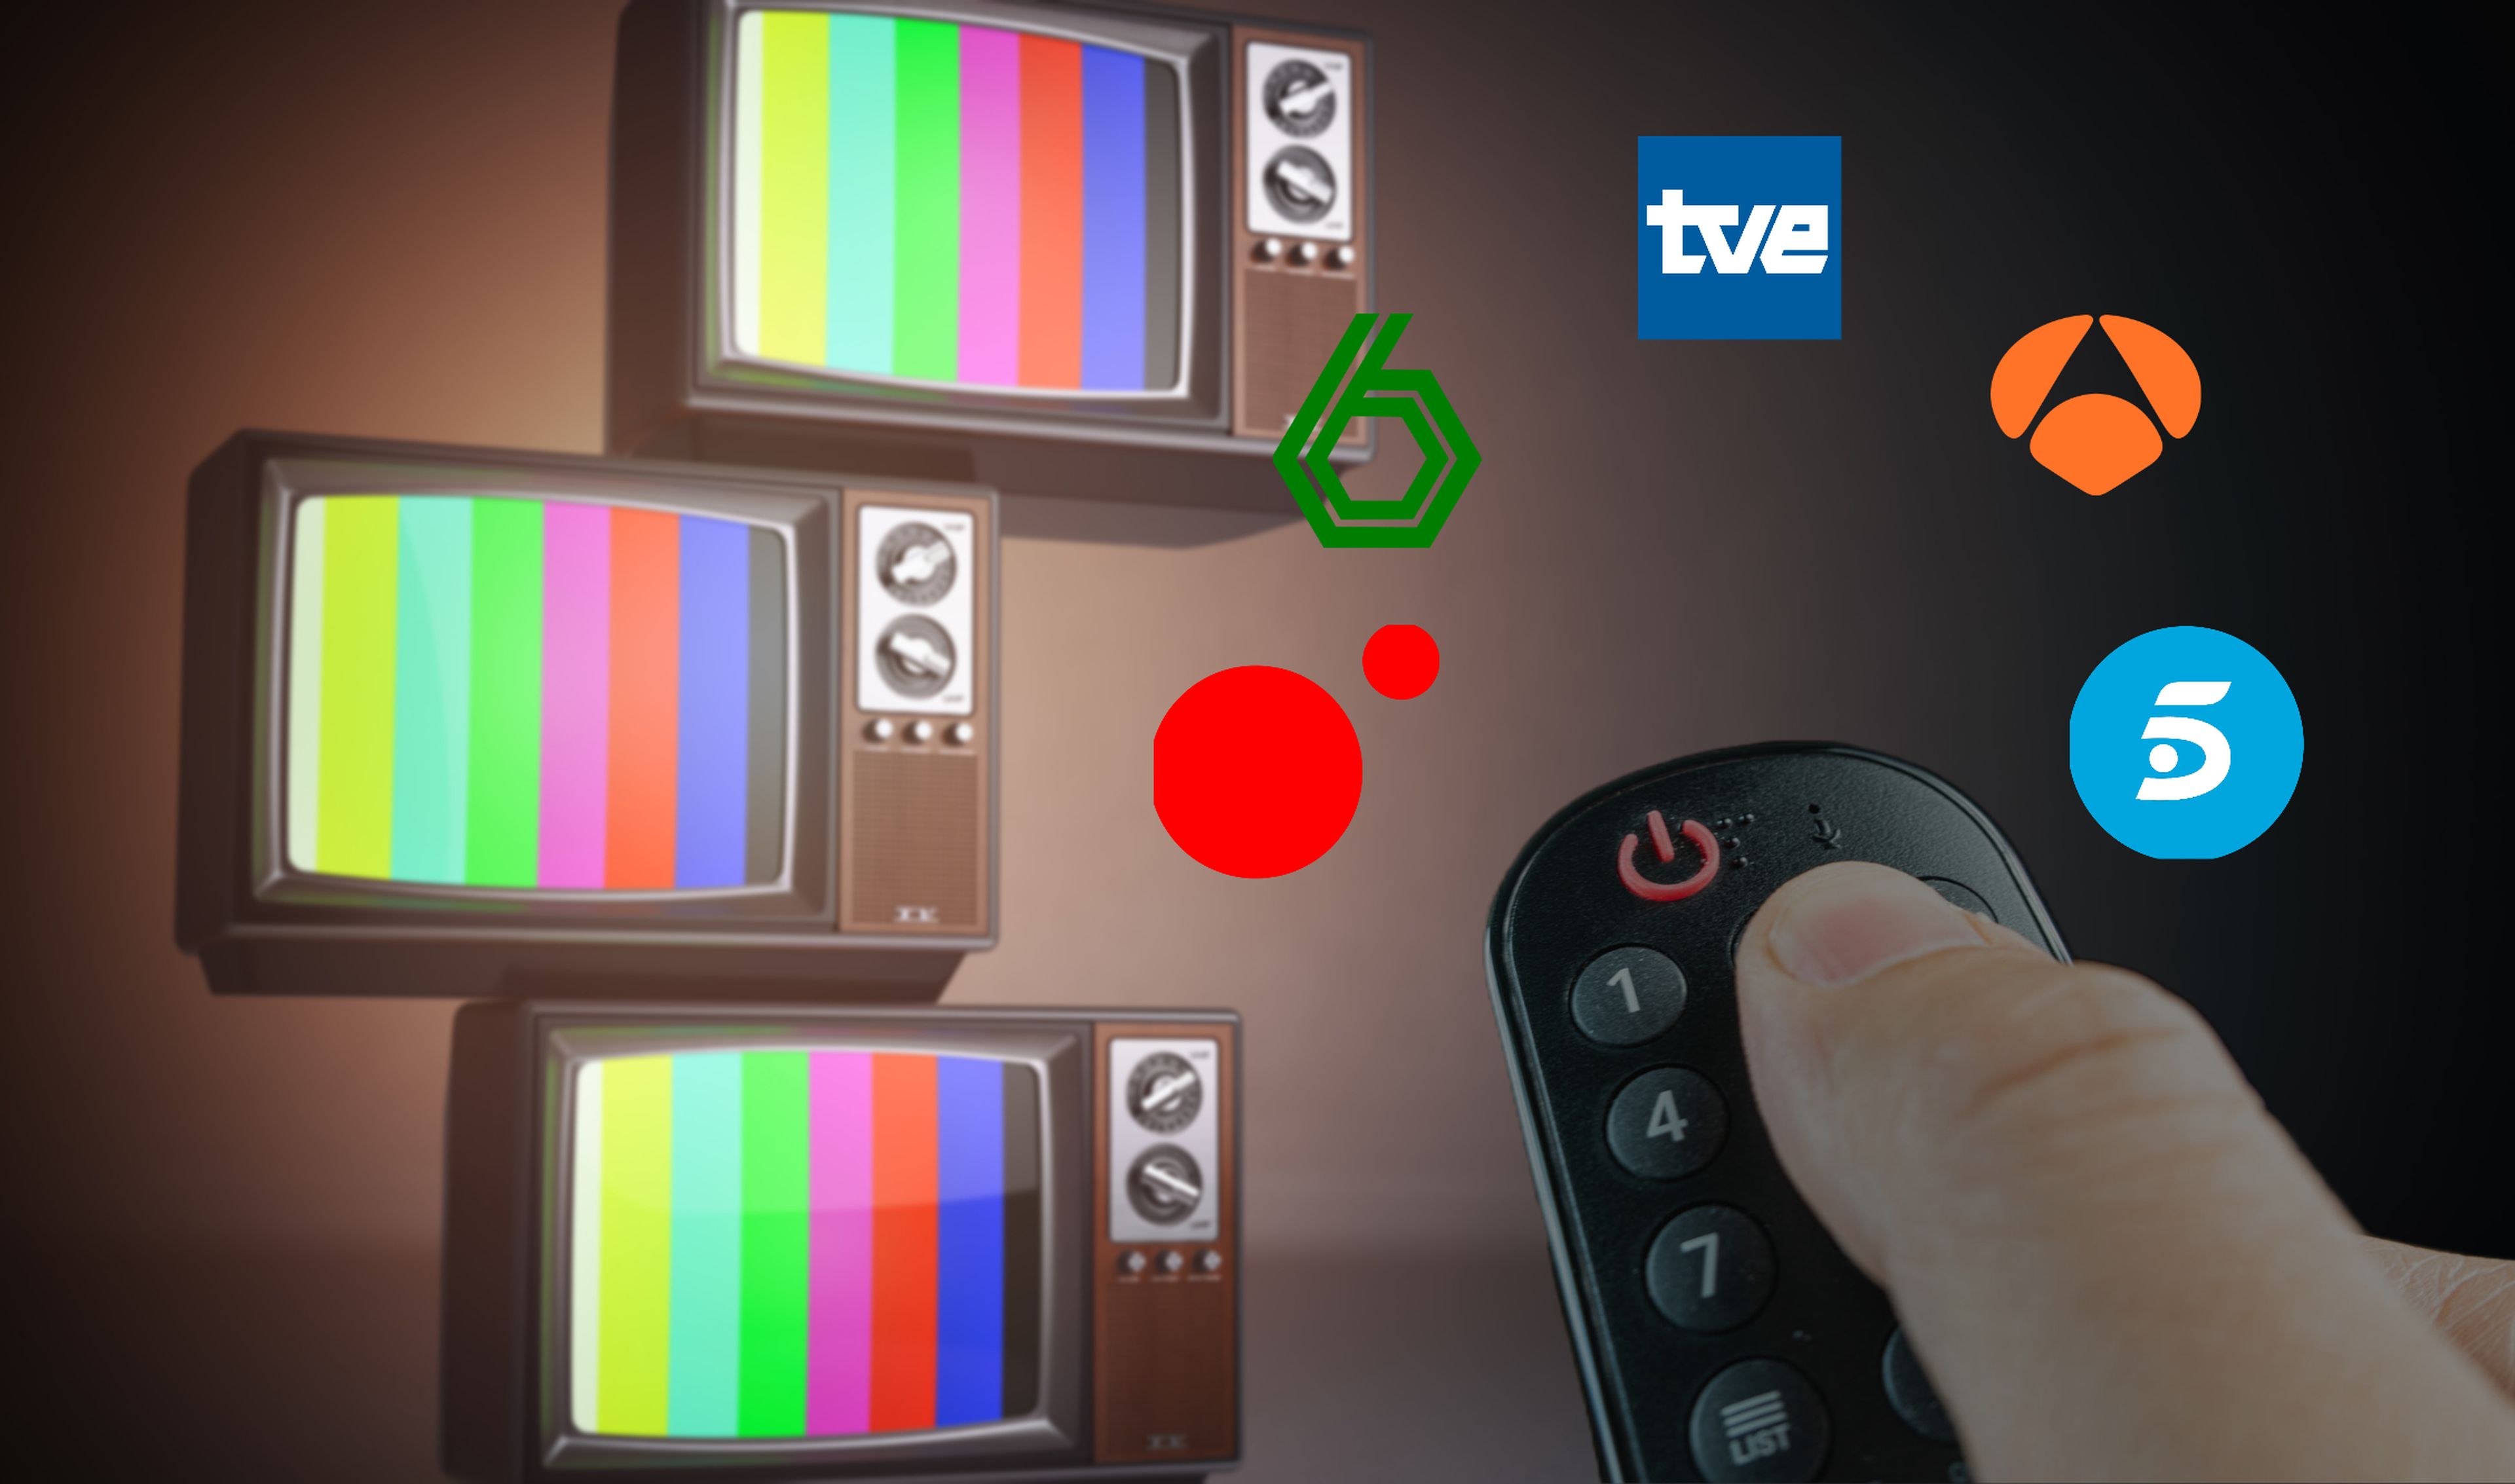 Activar TDT en Smart tv 